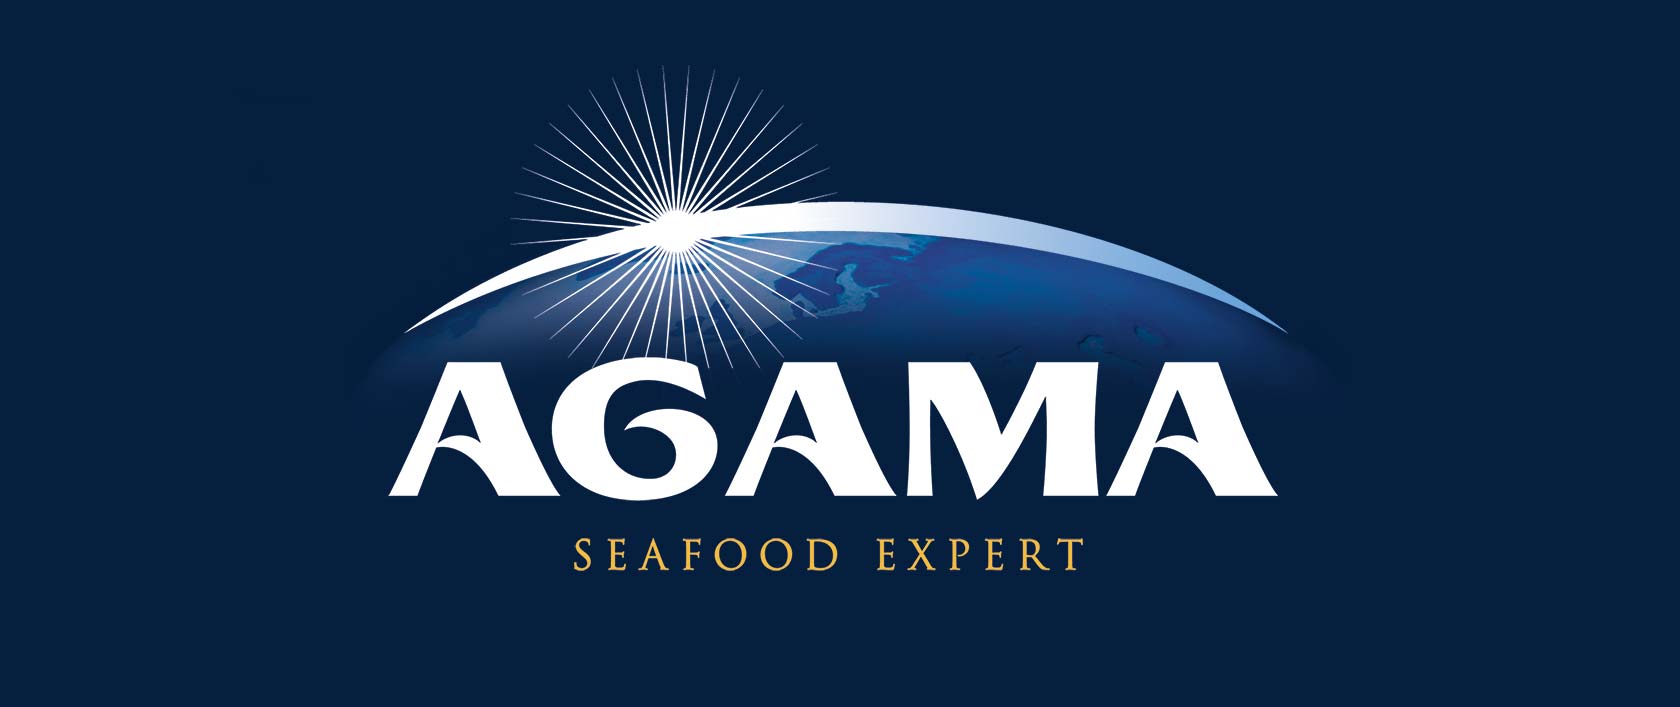 Создание логотипа AGAMA - разработан SOLDIS Communications